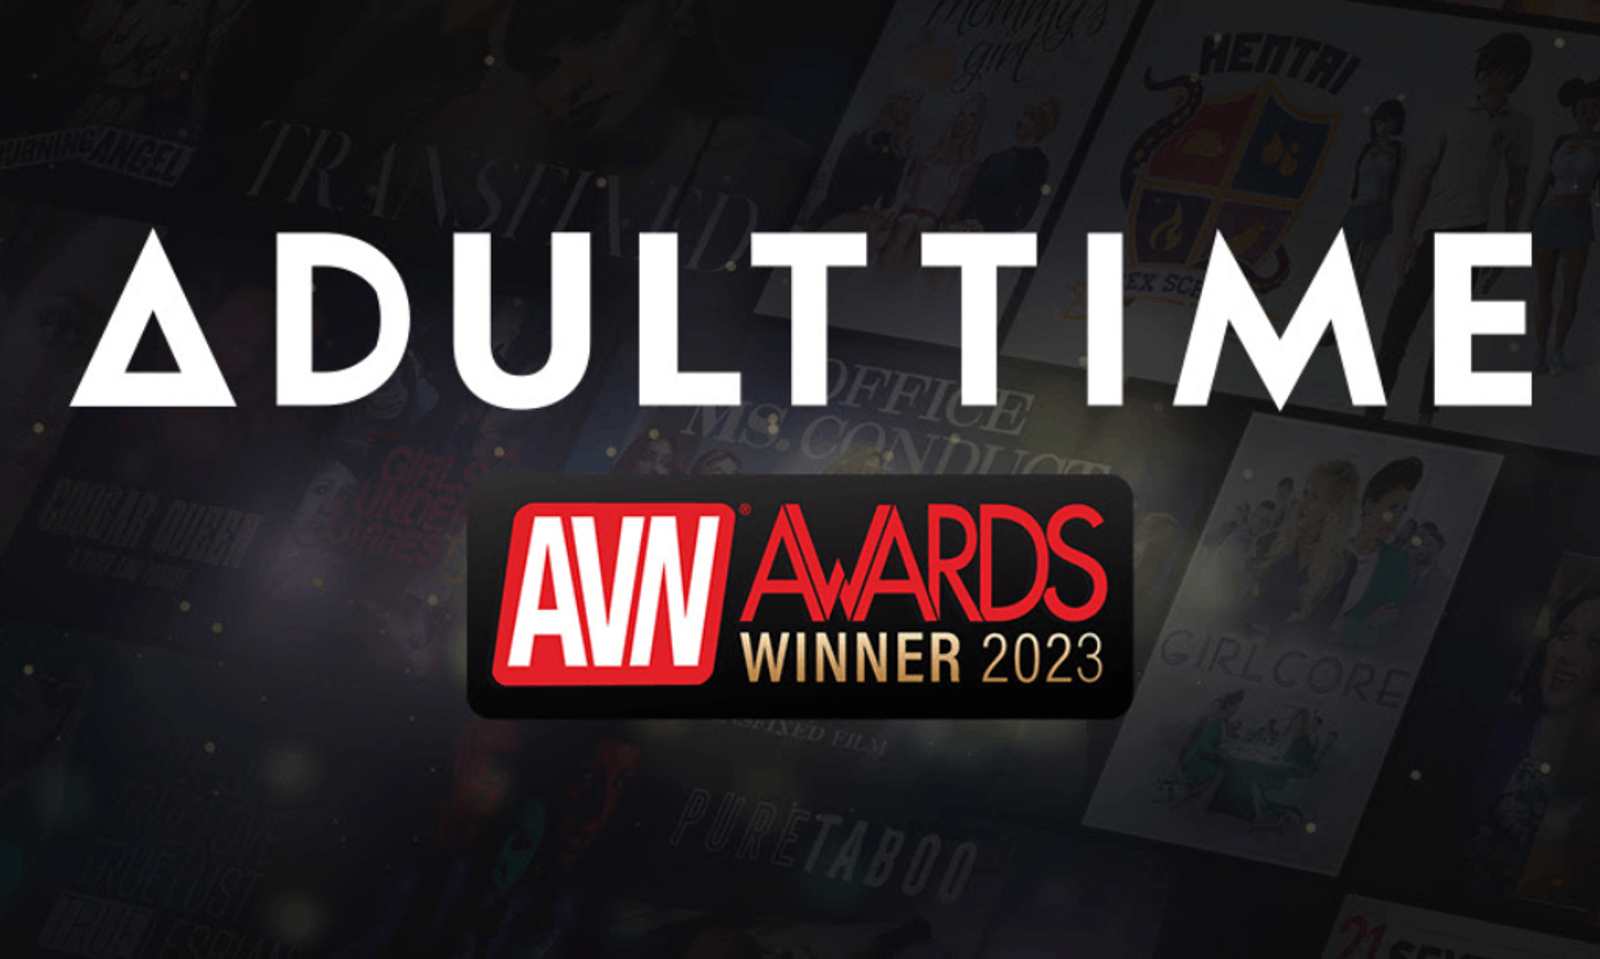 Adult Time Announces 12 AVN Award Wins